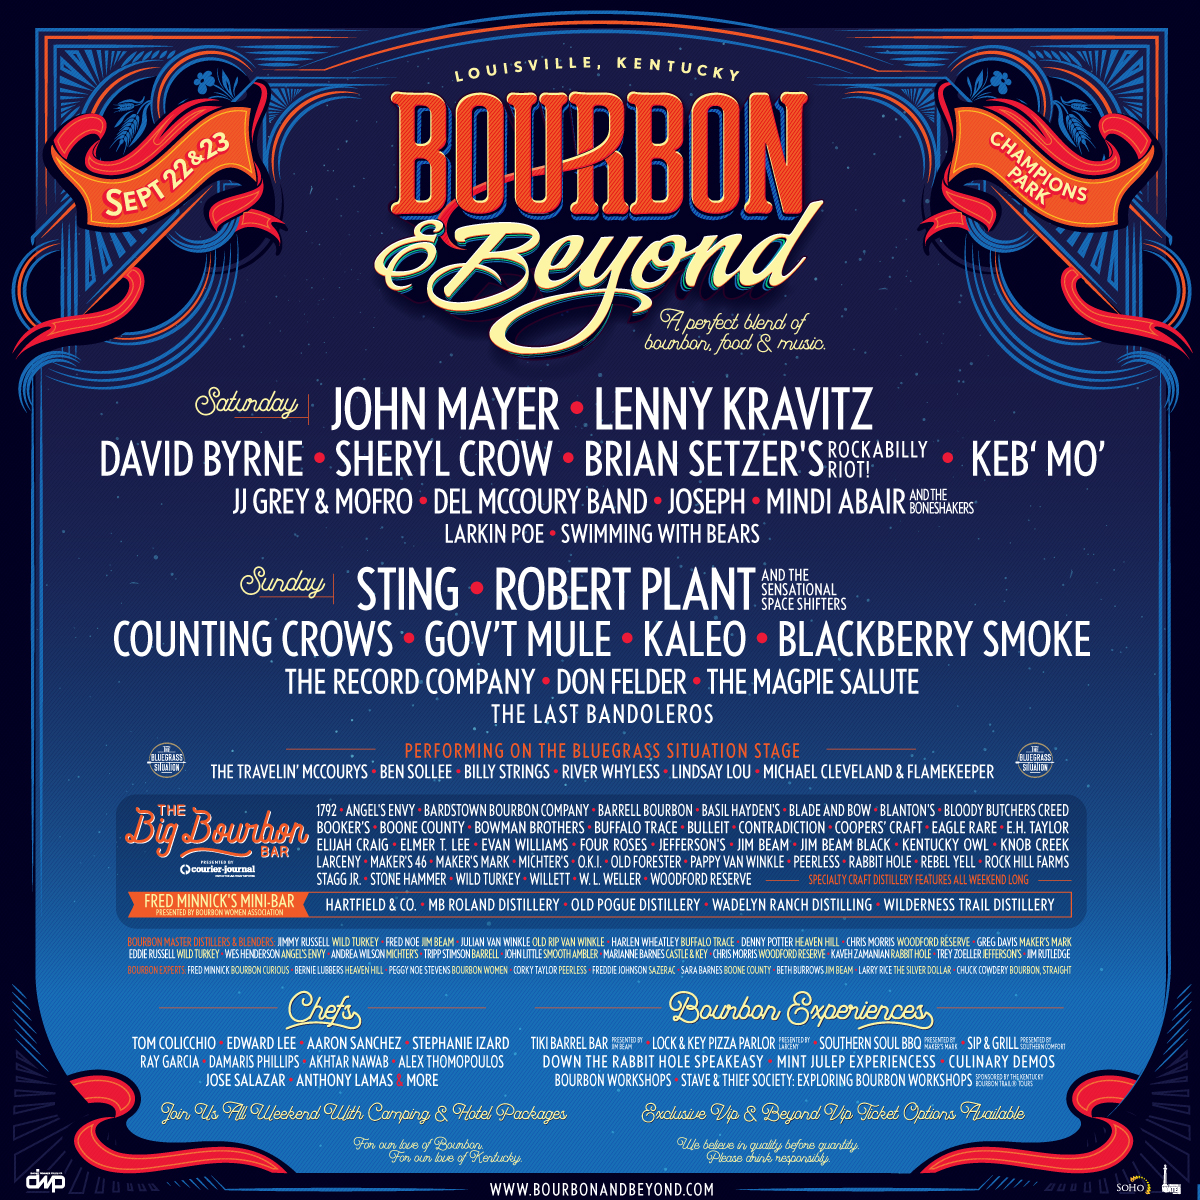 Cool Music Festival in Louisville,Ky Sept 2223 (Bourbon & Beyond